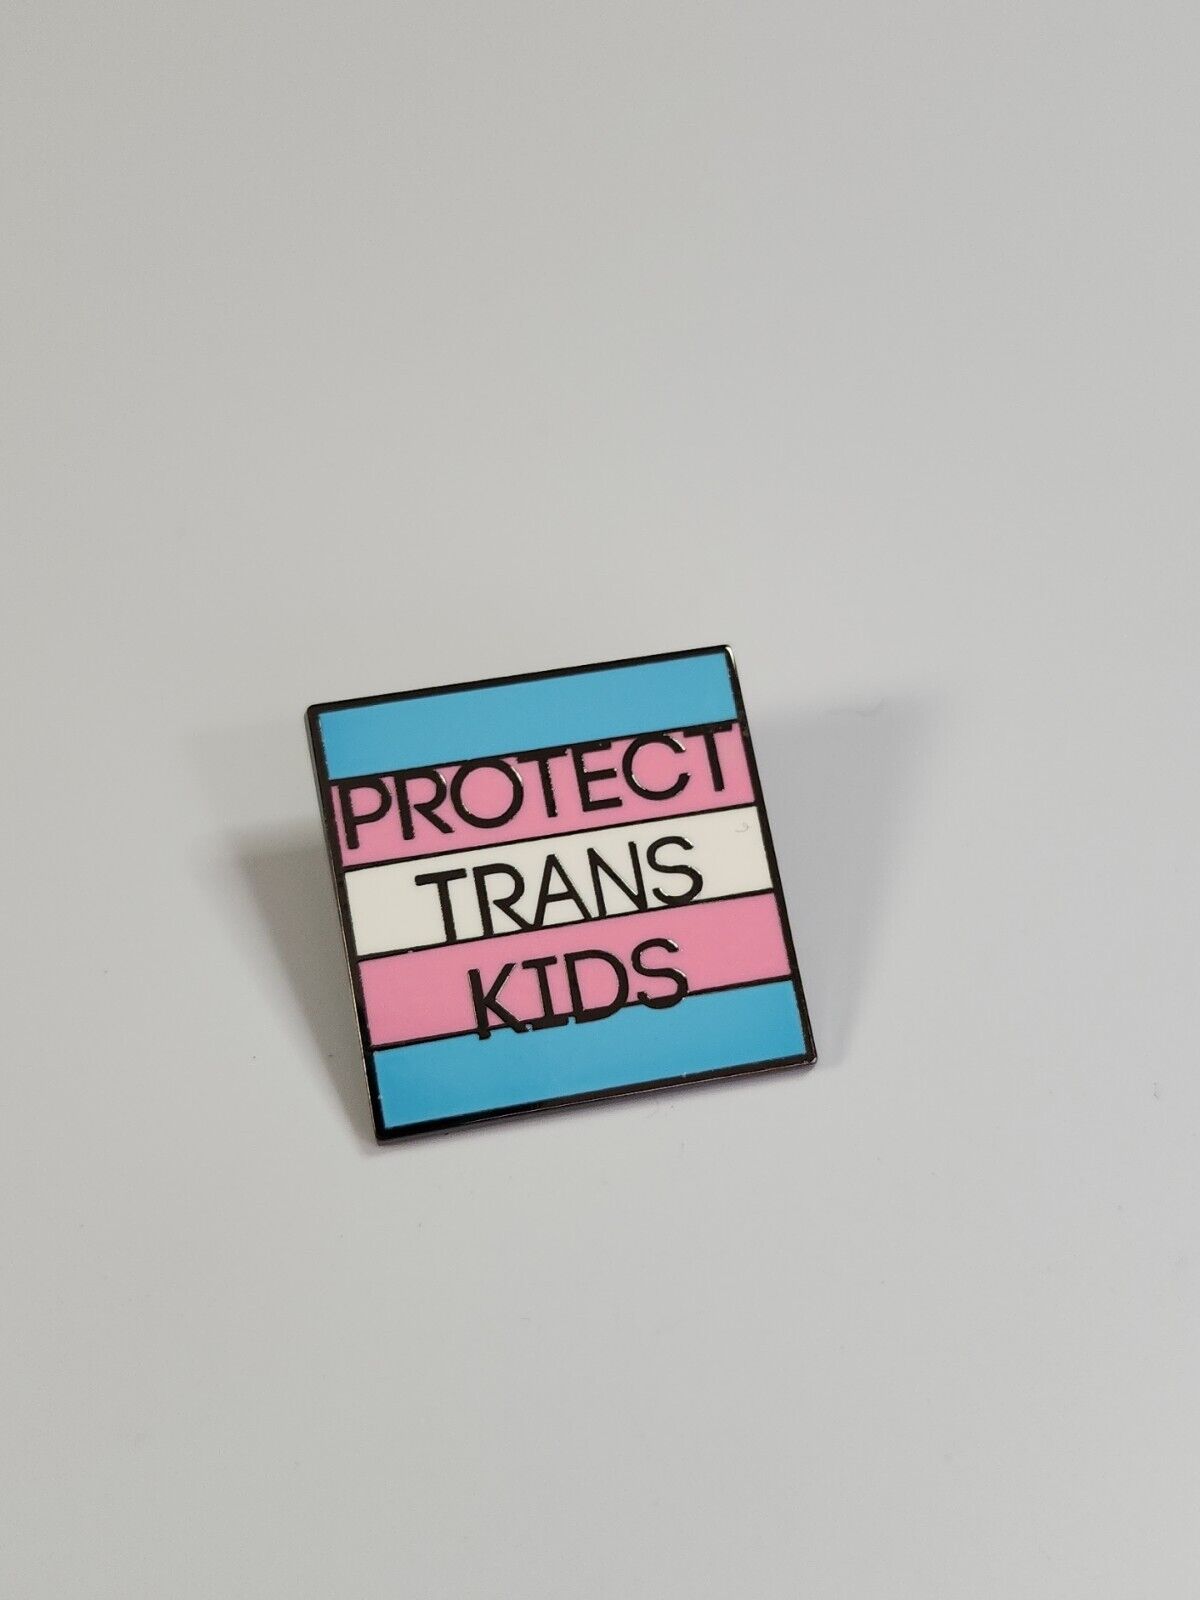 Protect Trans Kids Brooch Lapel Pin Blue & Pink Stripes